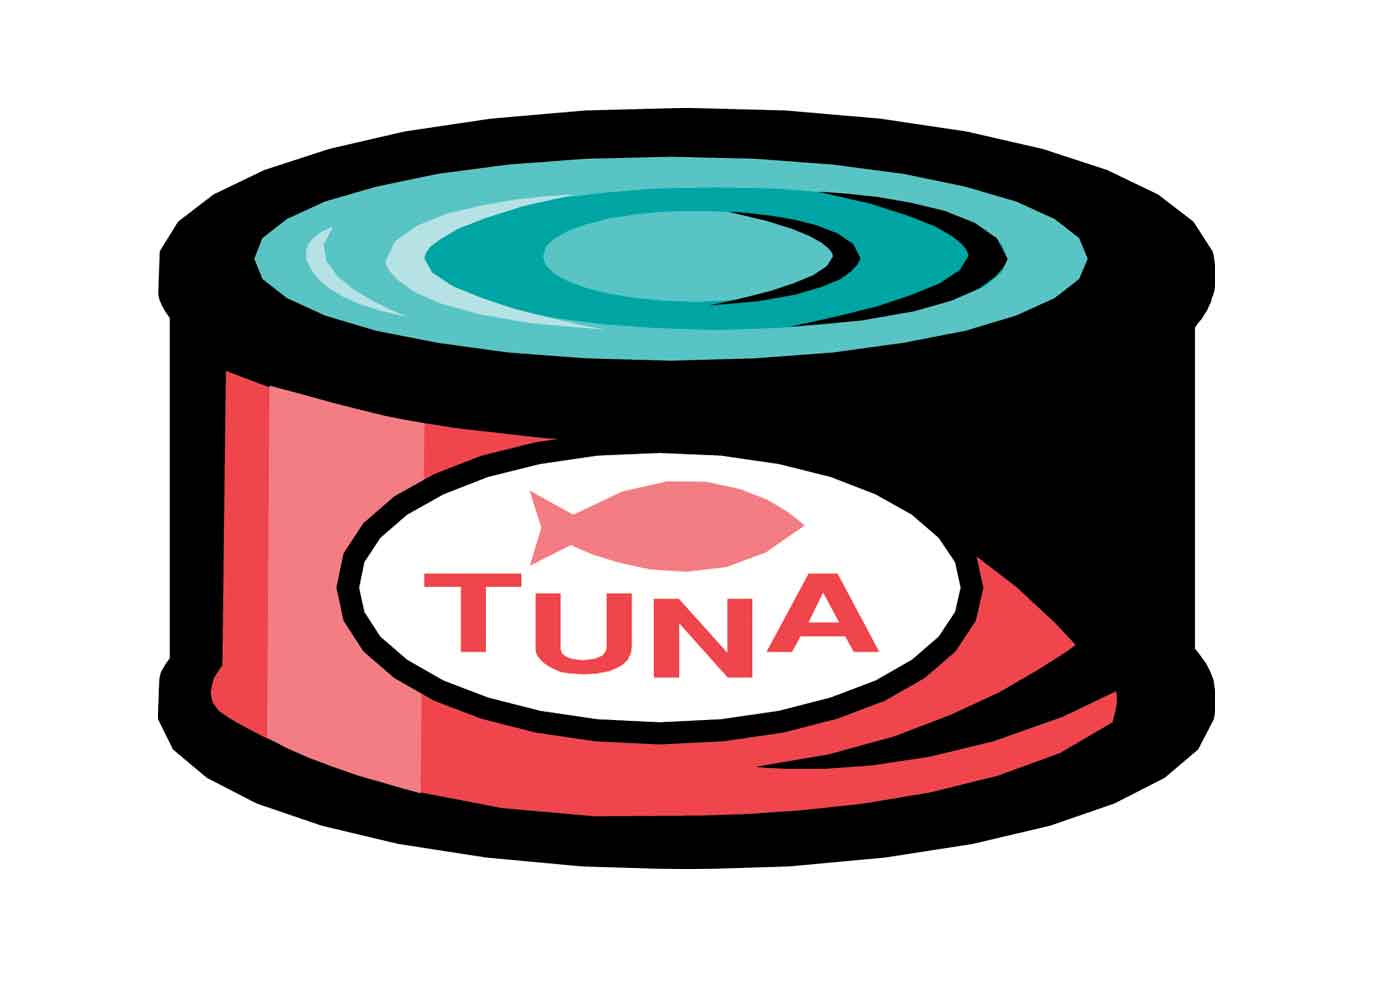 tuna fish clip art free - photo #30